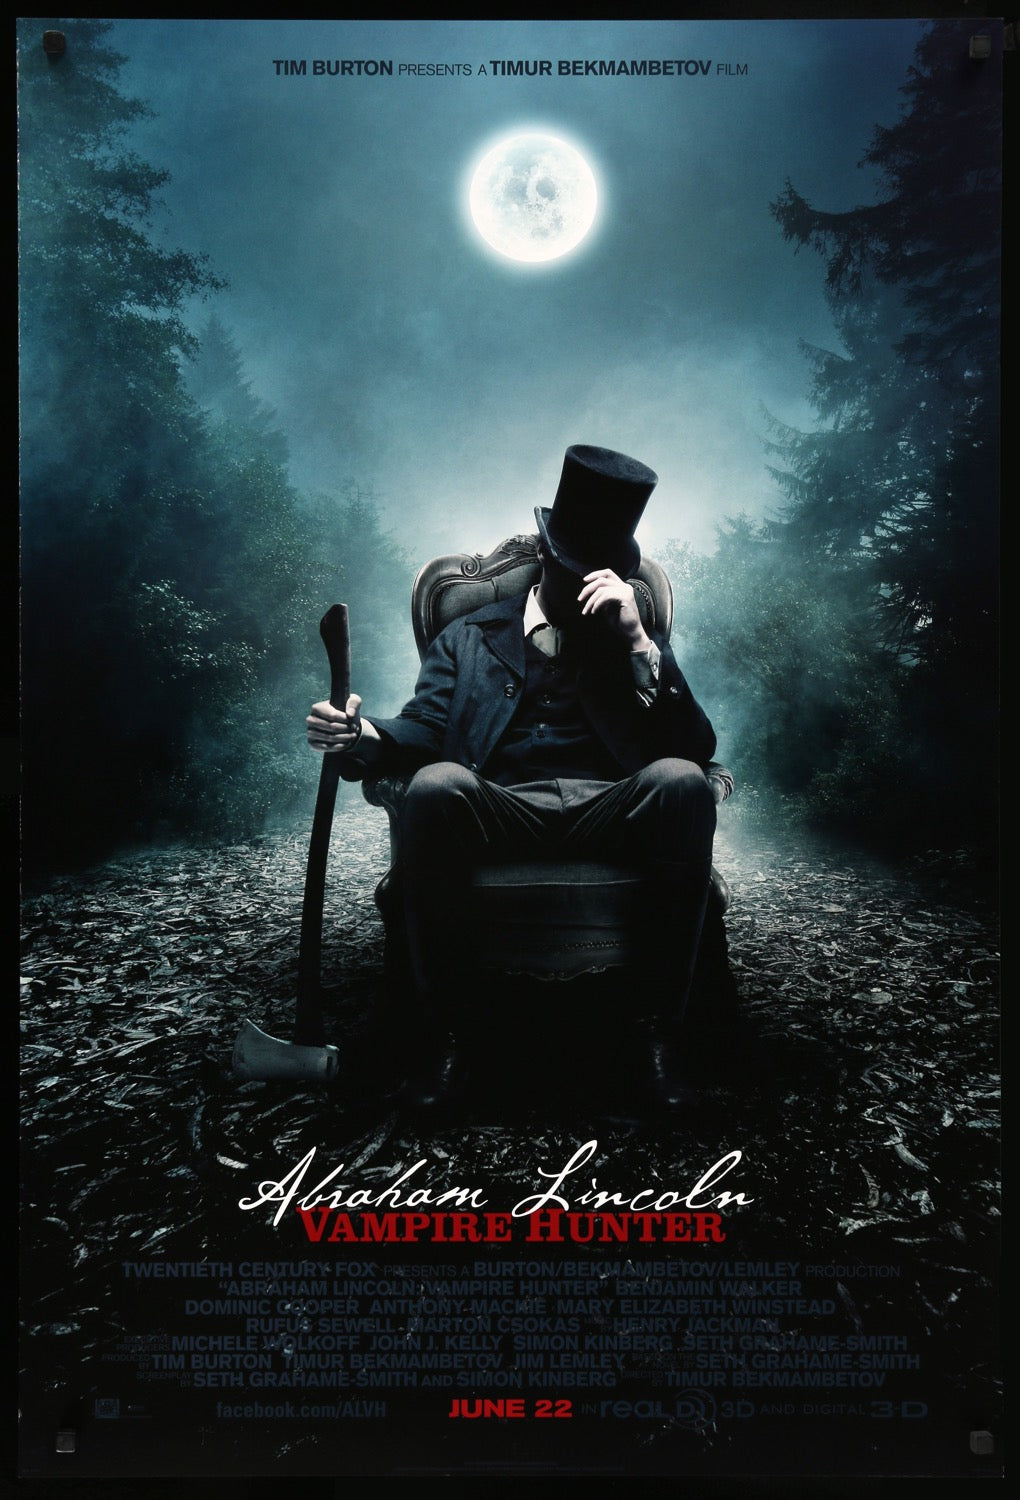 Abraham Lincoln: Vampire Hunter (2012) original movie poster for sale at Original Film Art